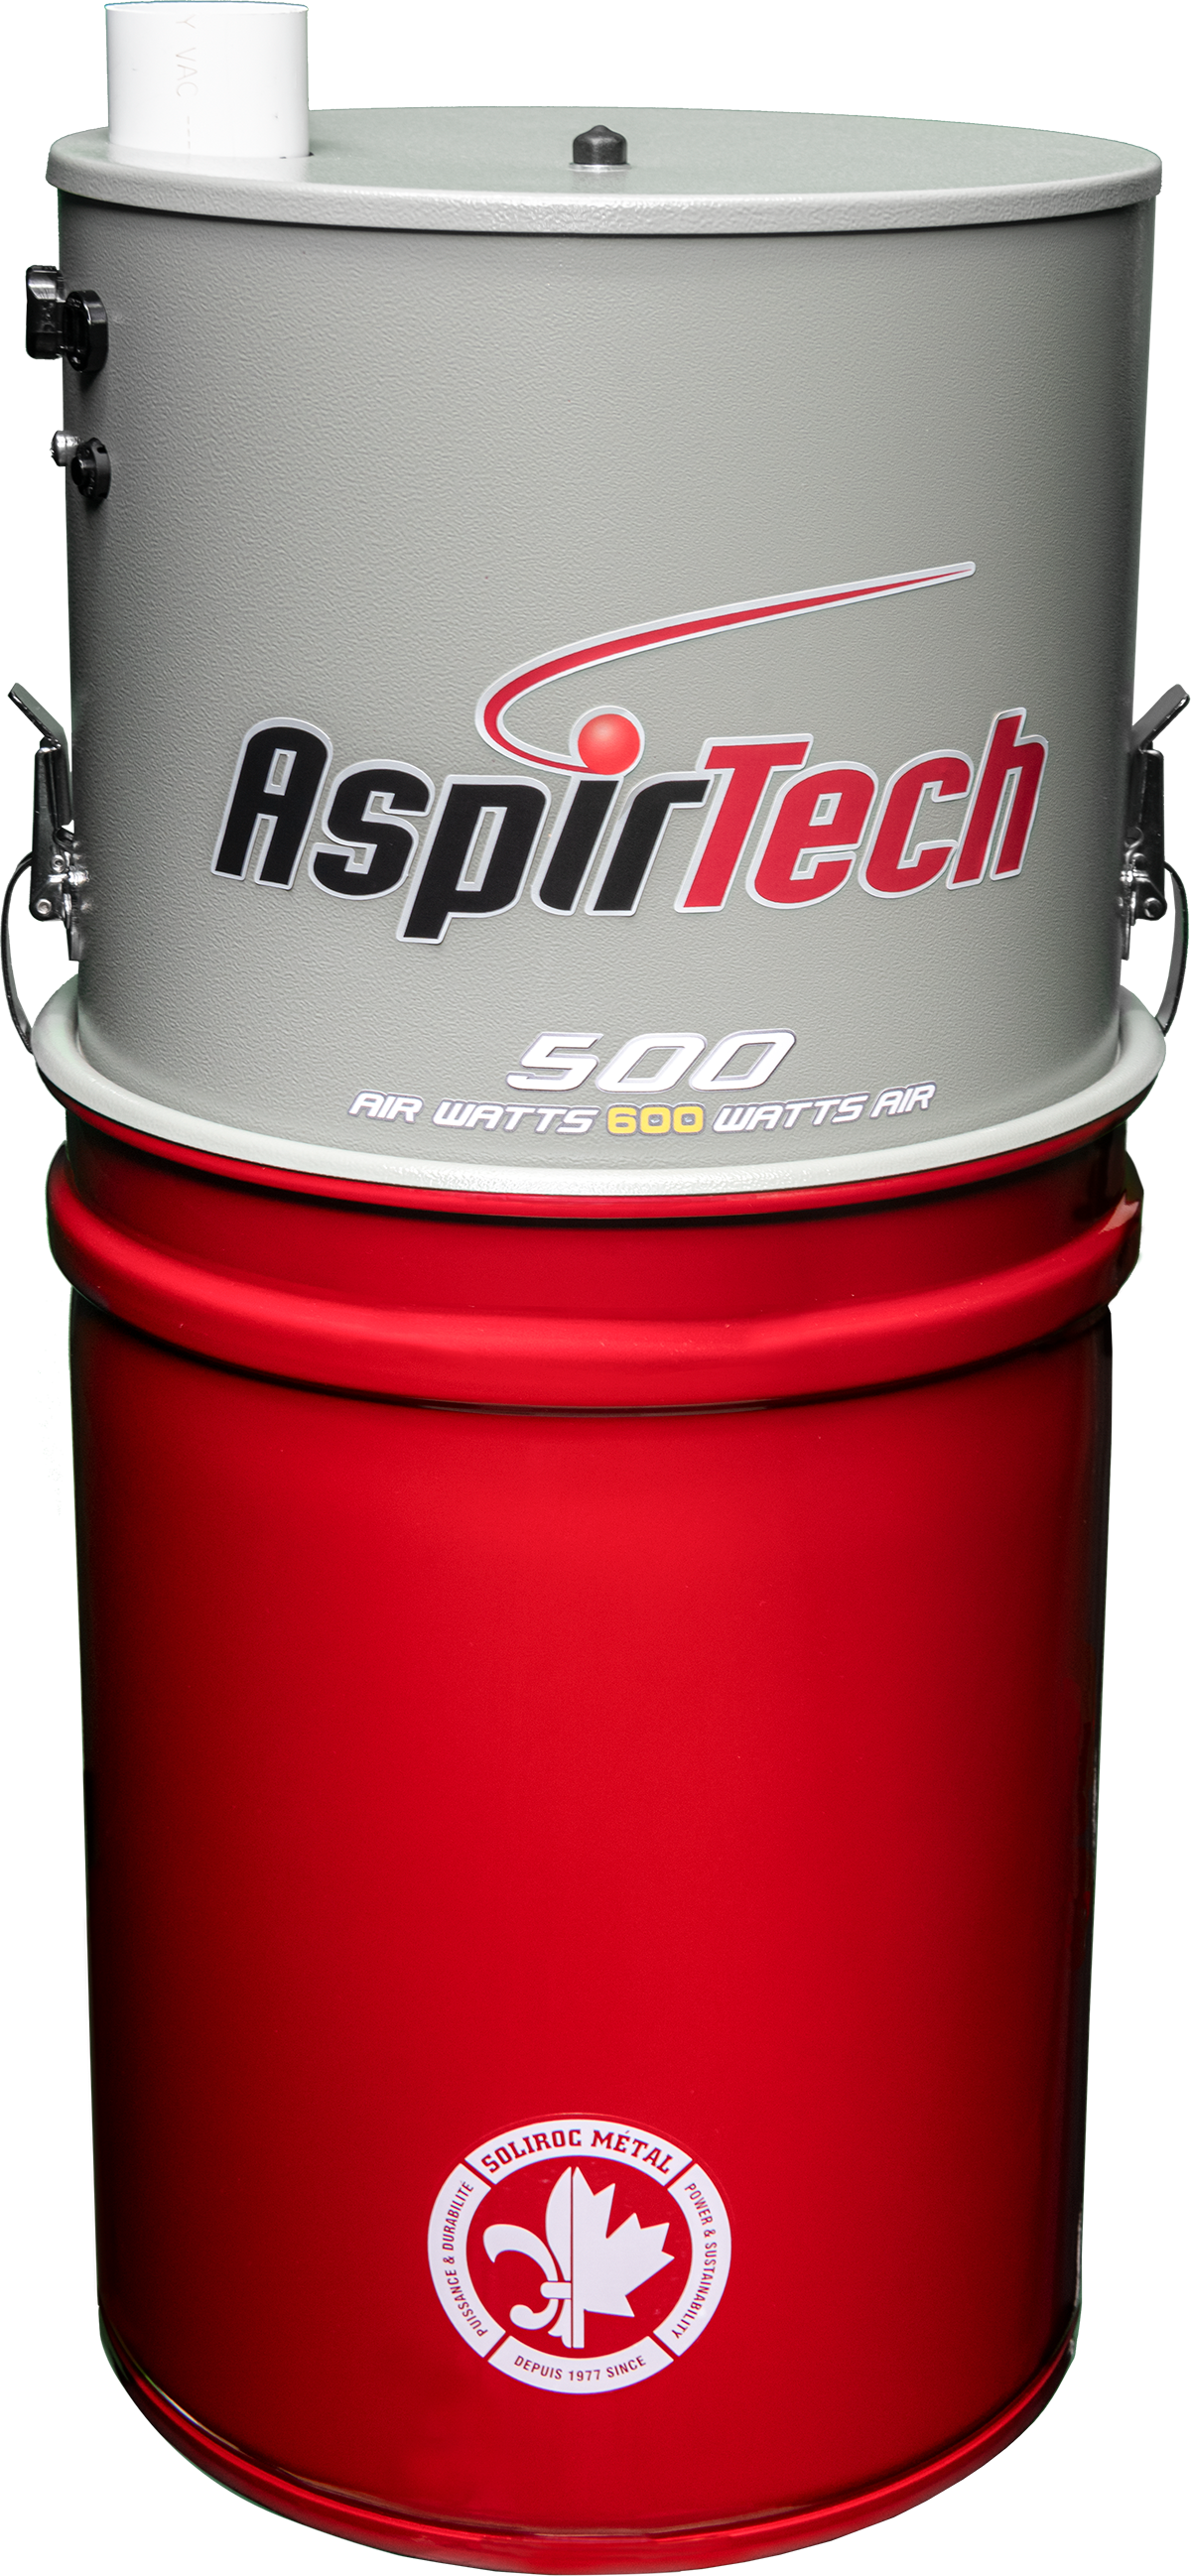 AG3000 - Aspirateur sans sac - 1000 Watt - Forte puissance d'aspiration -  Aspirateurs